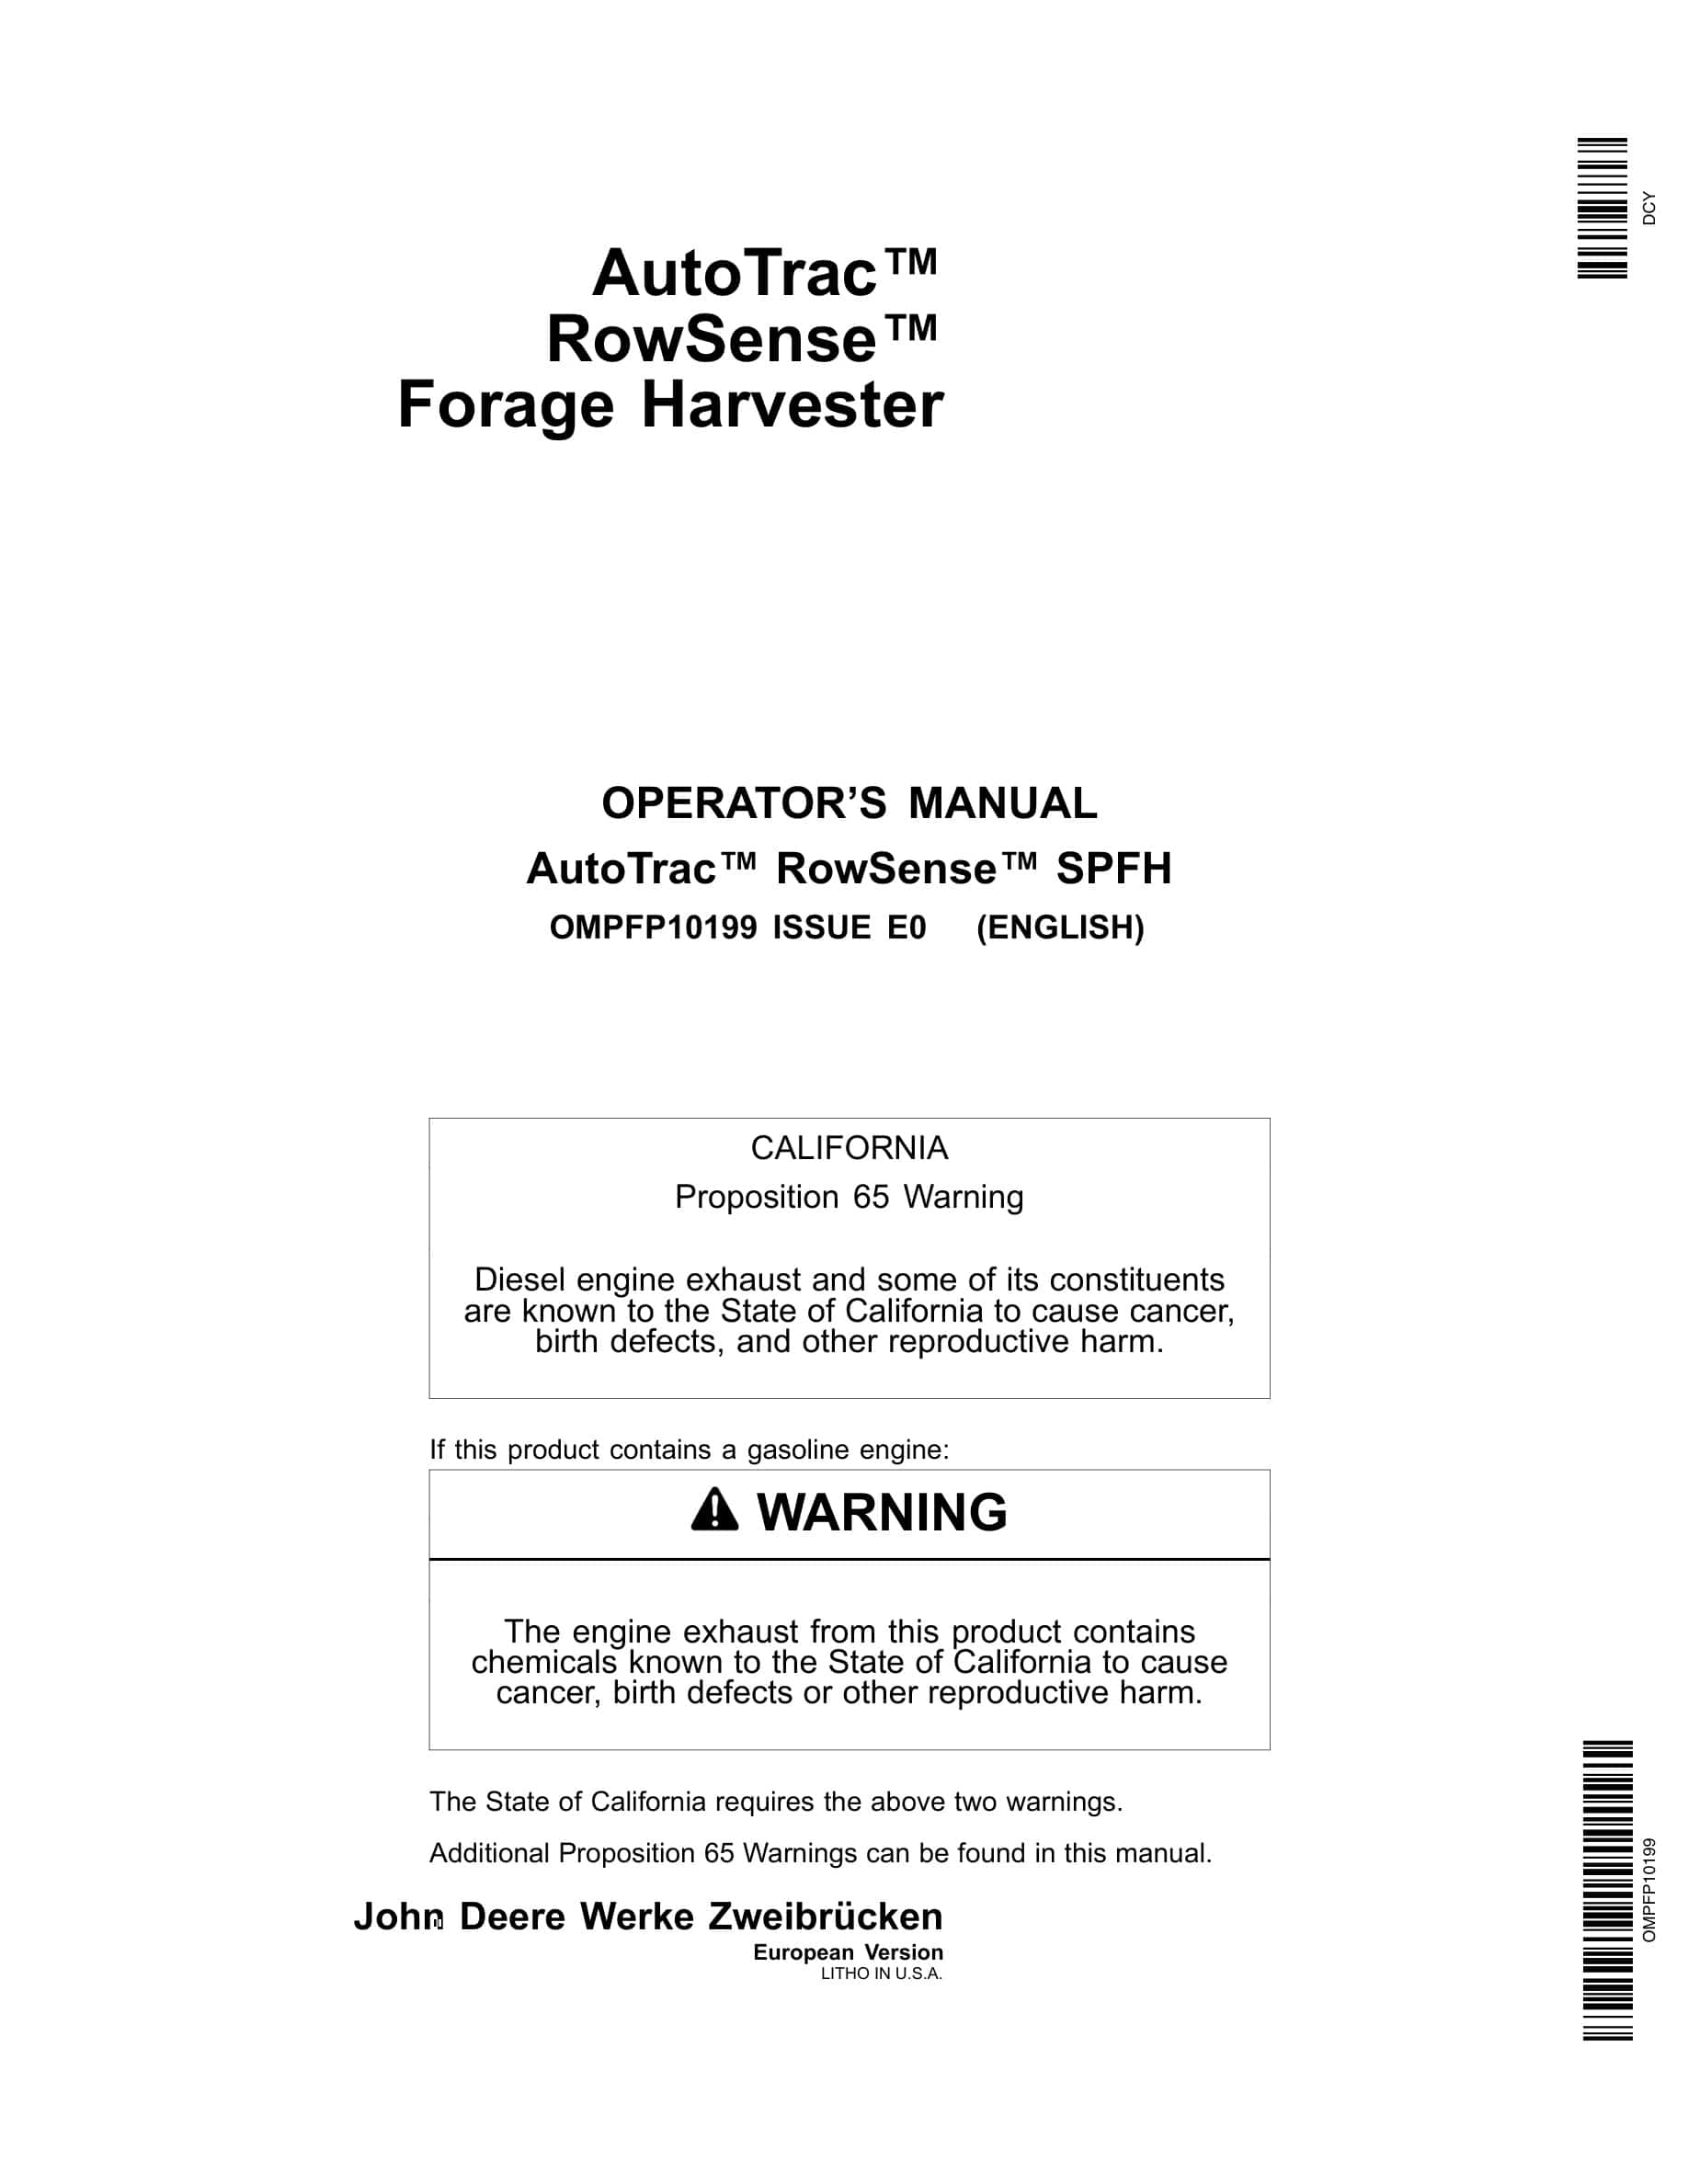 John Deere AutoTrac RowSense Forage Harvester Operator Manual OMPFP10199-1